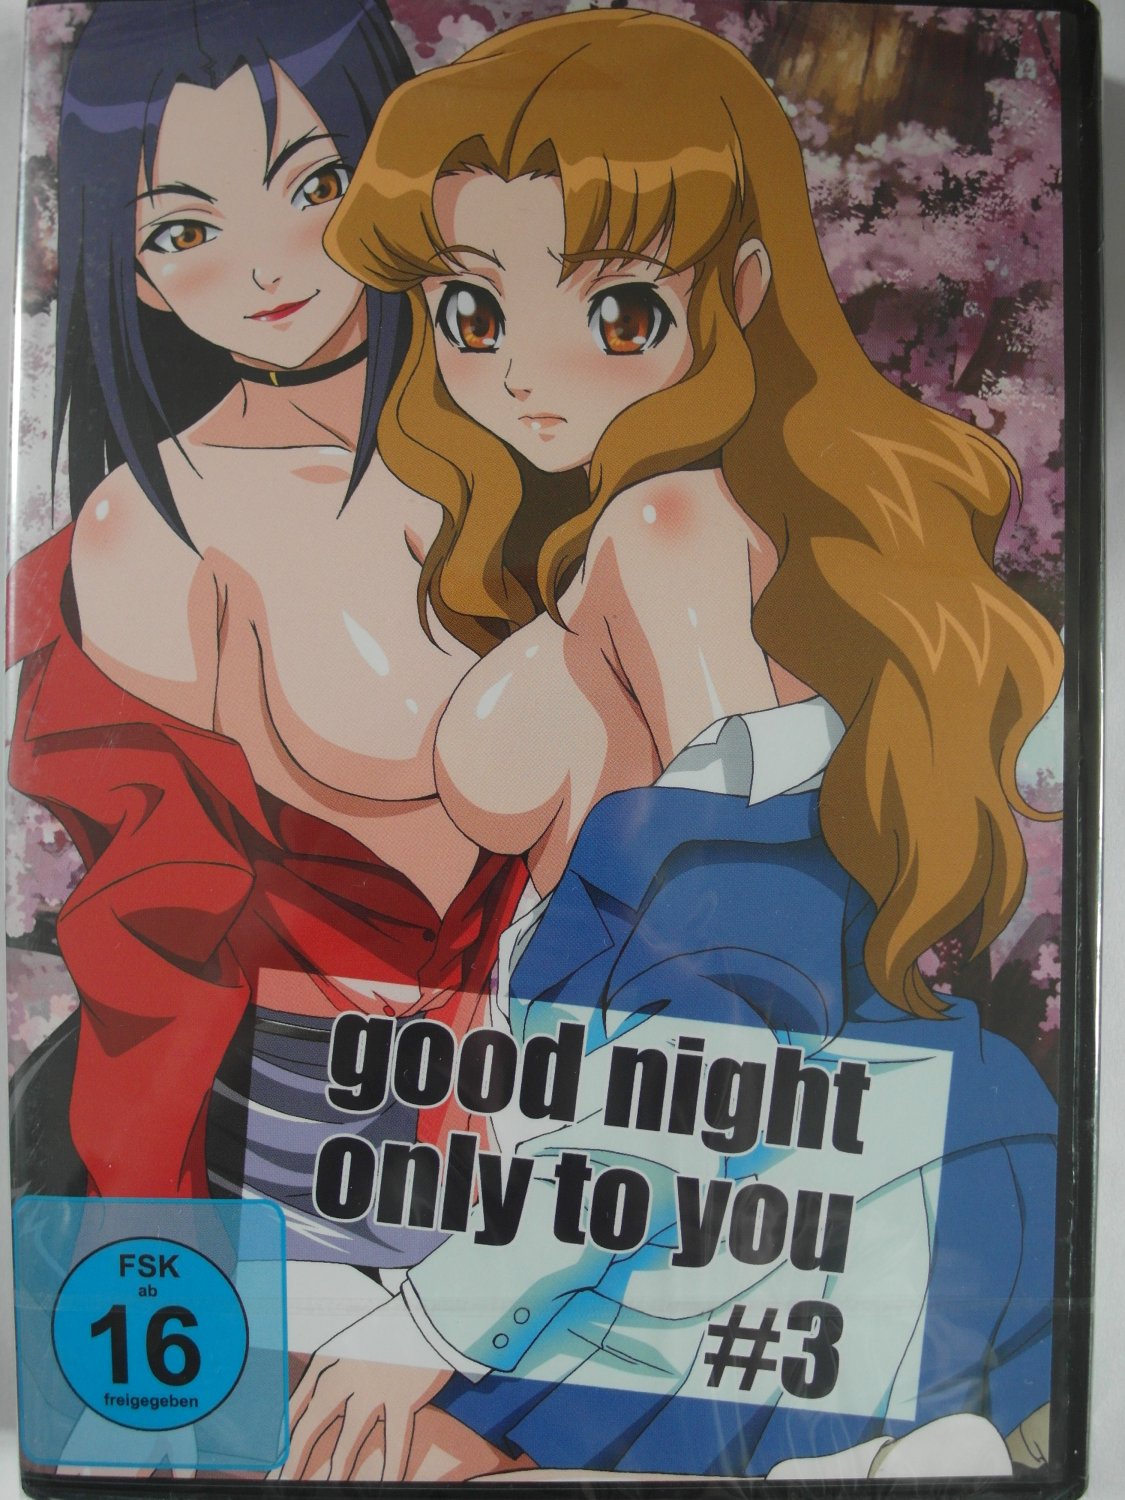 Erotic Anime Images eskort damer